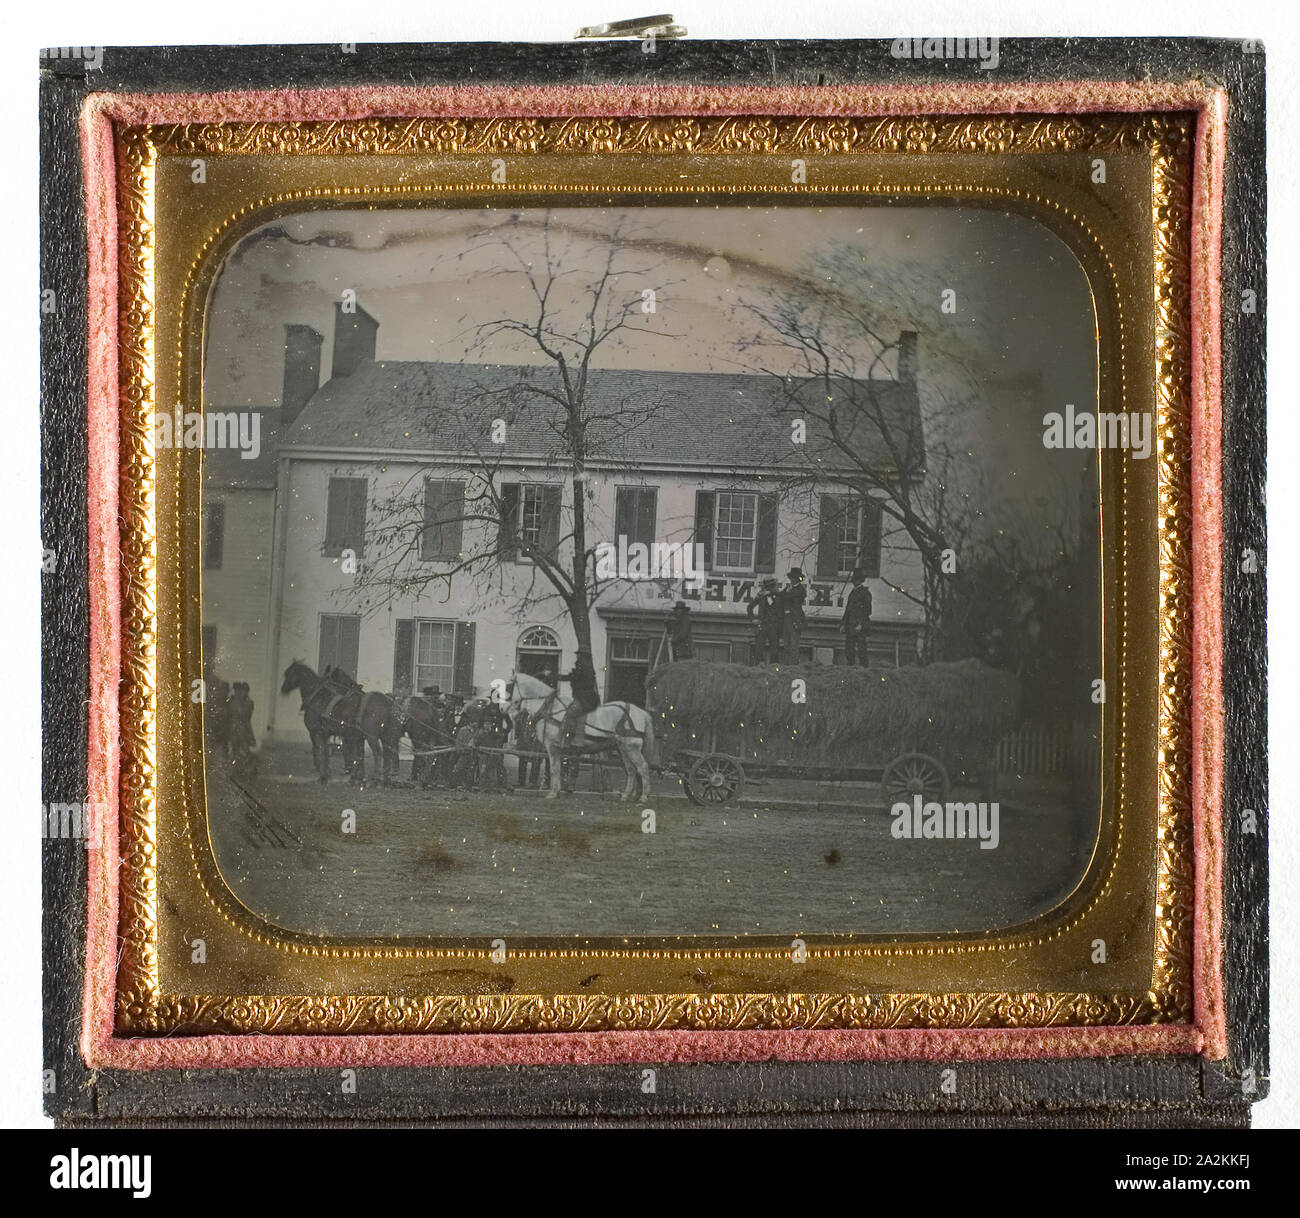 Untitled (Kennedy del negozio), 1839/99, secolo XIX, luogo sconosciuto, Daguerreotype, 7 x 8,2 cm (piastra), 8 x 9.2 x 1.5 cm (caso), Untitled, 1839/99, secolo XIX, luogo sconosciuto, Daguerreotype, 8,2 x 7 cm (piastra), 9.5 x 8.2 x 1 cm (caso Foto Stock